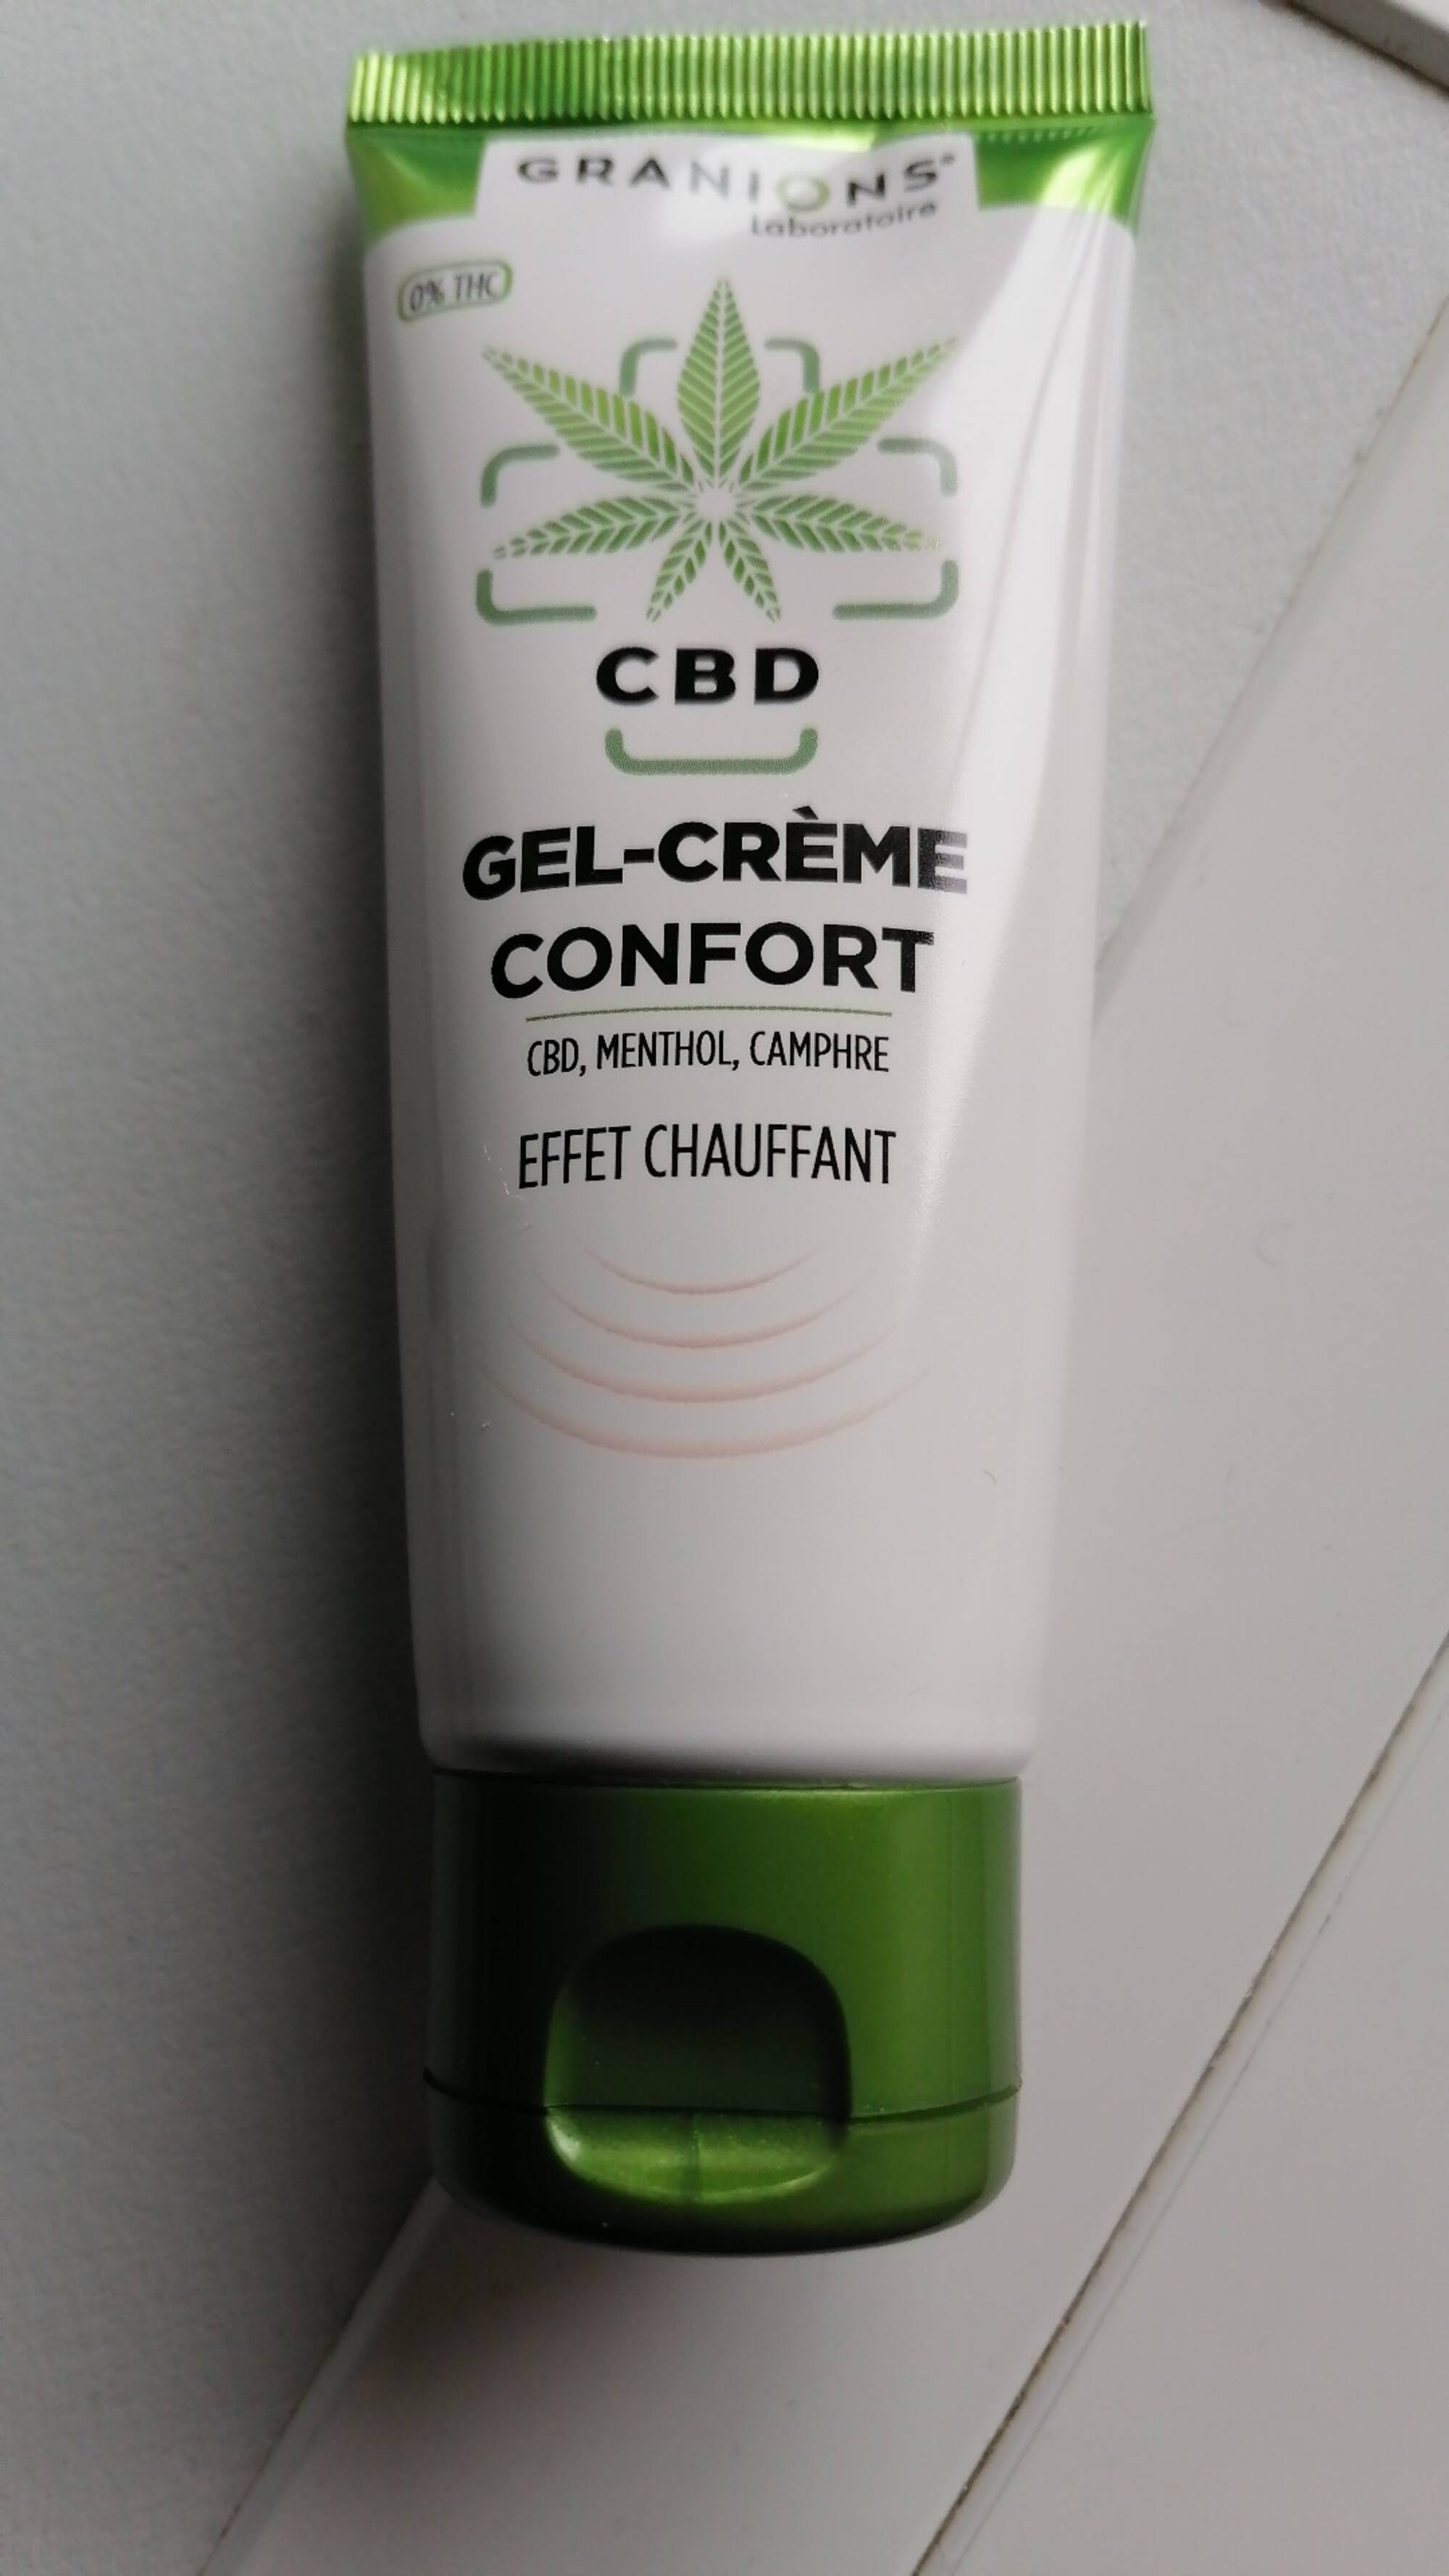 GRANIONS - CBD - Gel-crème confort effet chauffant